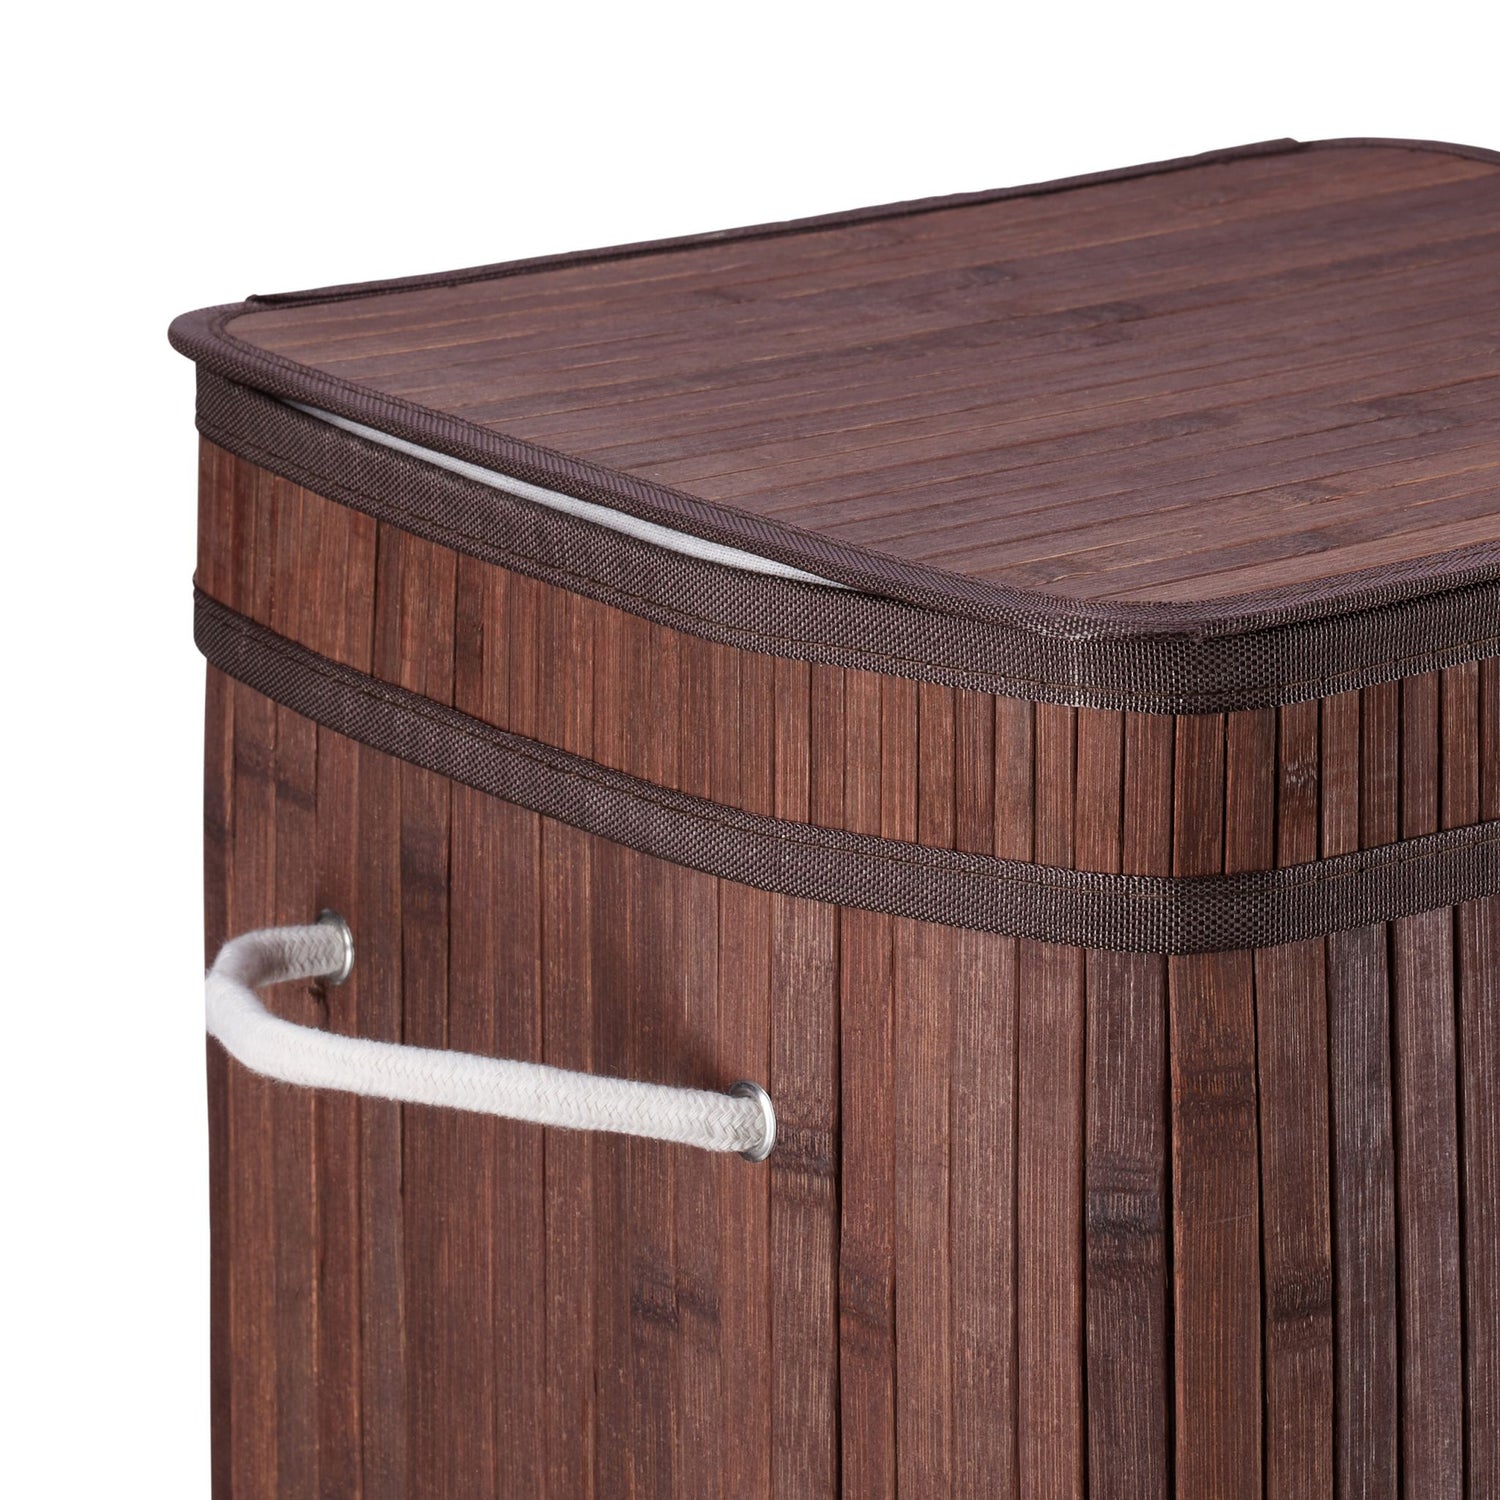 RelaxDays Foldable Bamboo Laundry Basket Bamboo Bathrooms